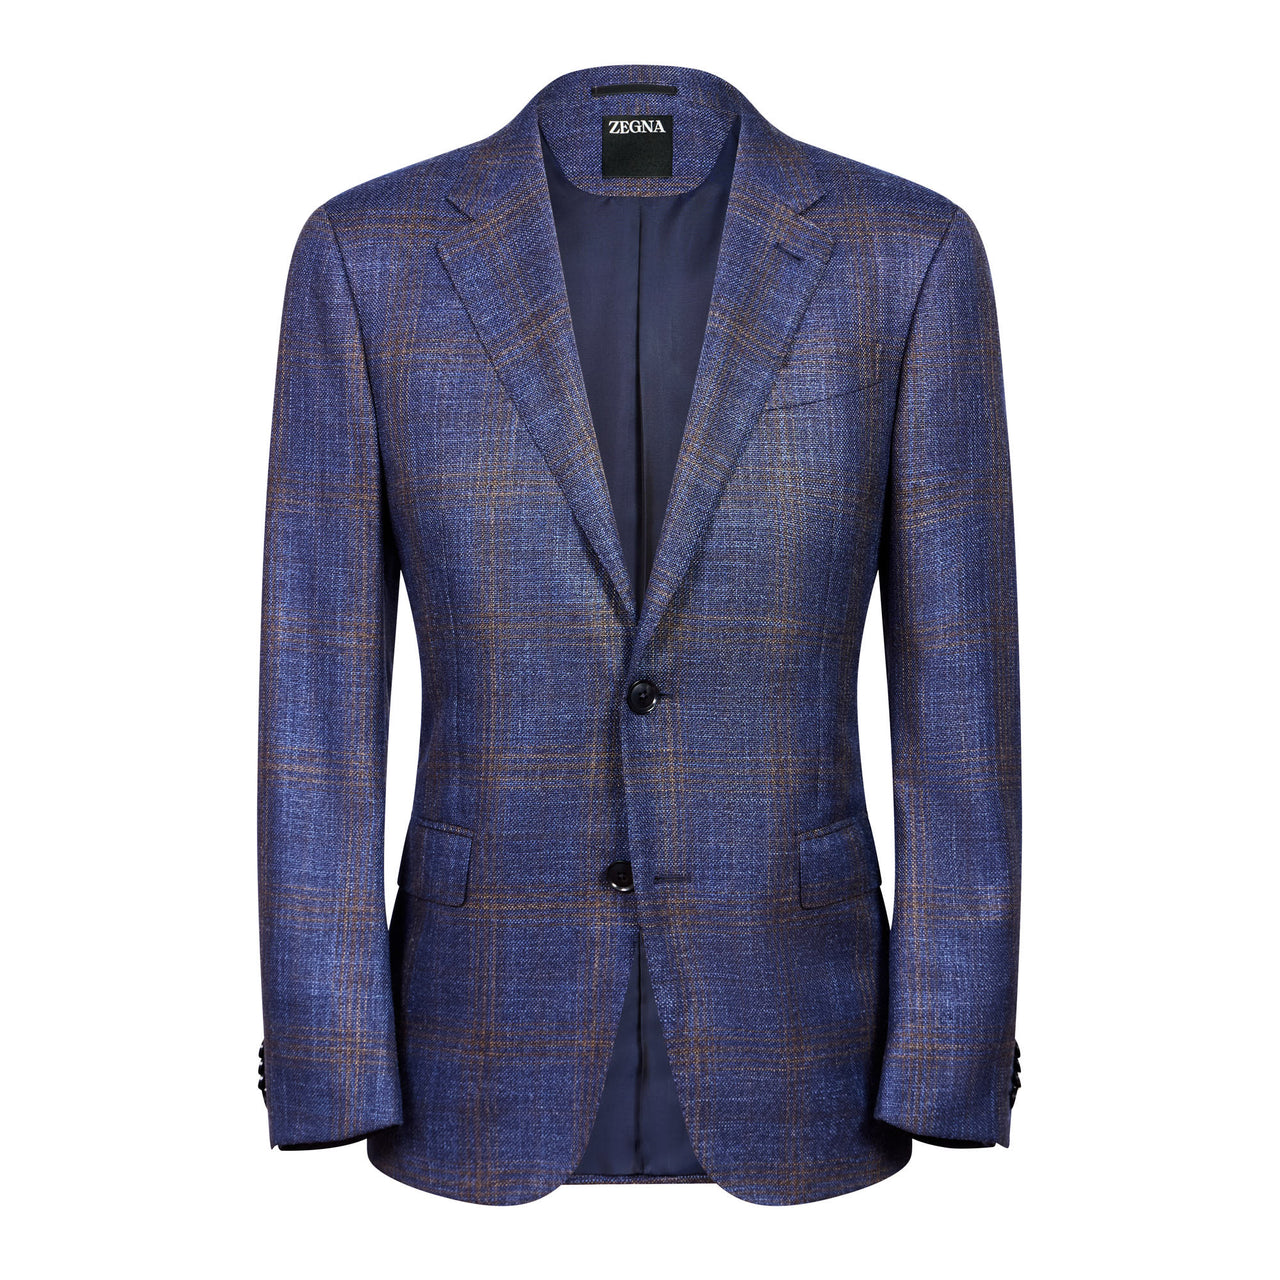 ZEGNA Wool Silk Check Jacket NAVY/BROWN REG